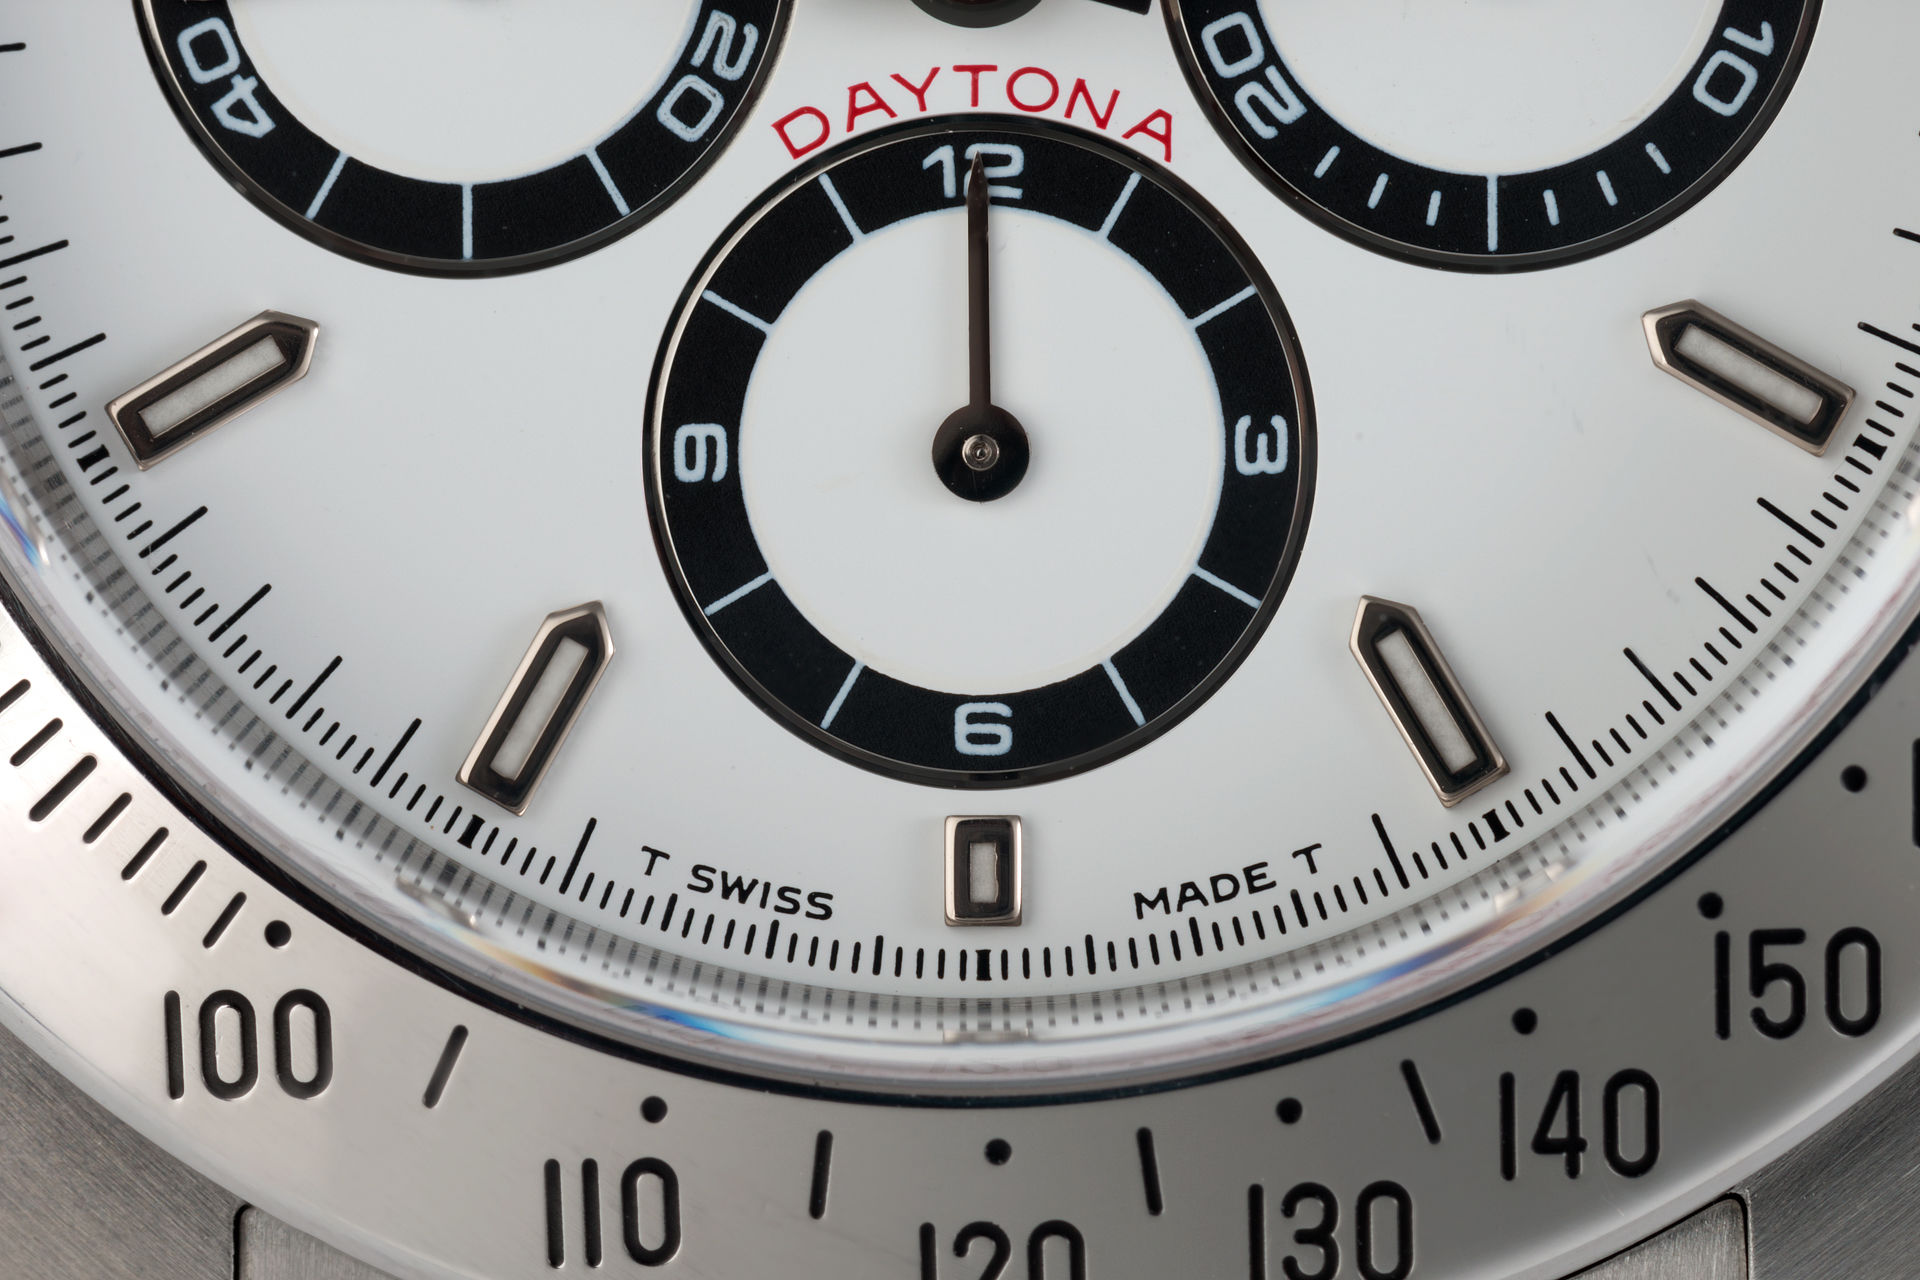 ref 16520 | 'Zenith' Complete Investment Set | Rolex Cosmograph Daytona